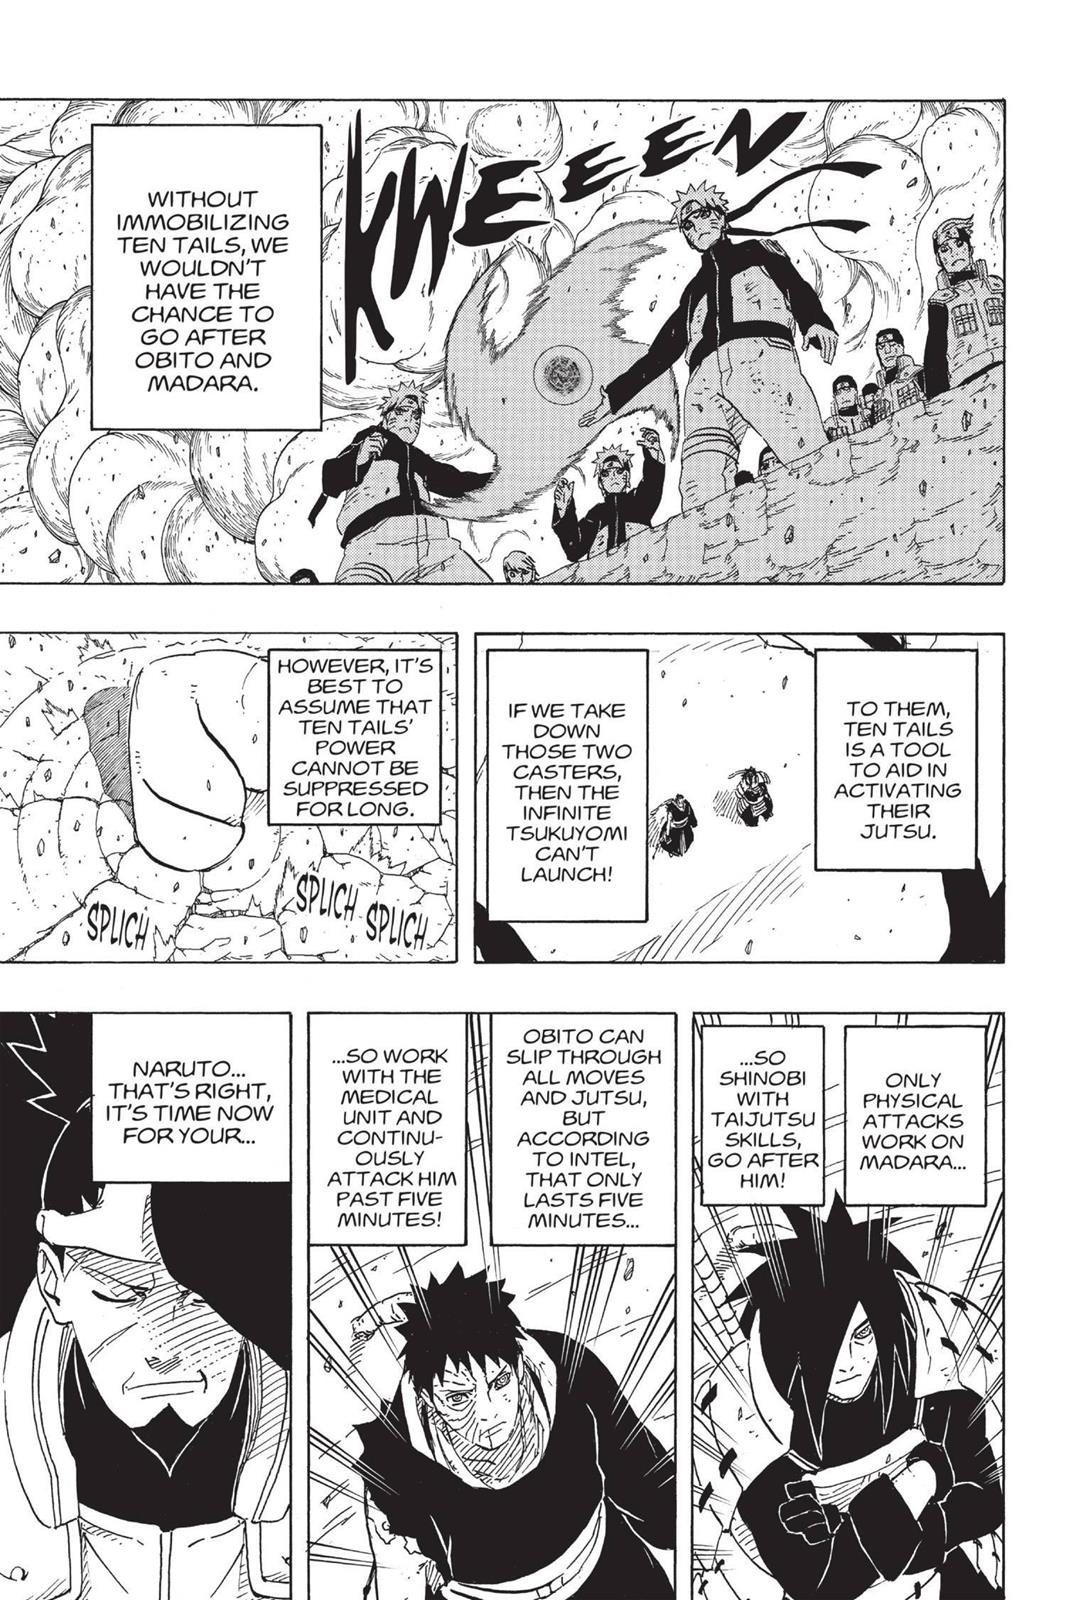 Sakura (Boruto) vs Naruto (Boruto/Sem Kurama)  - Página 6 0612-015